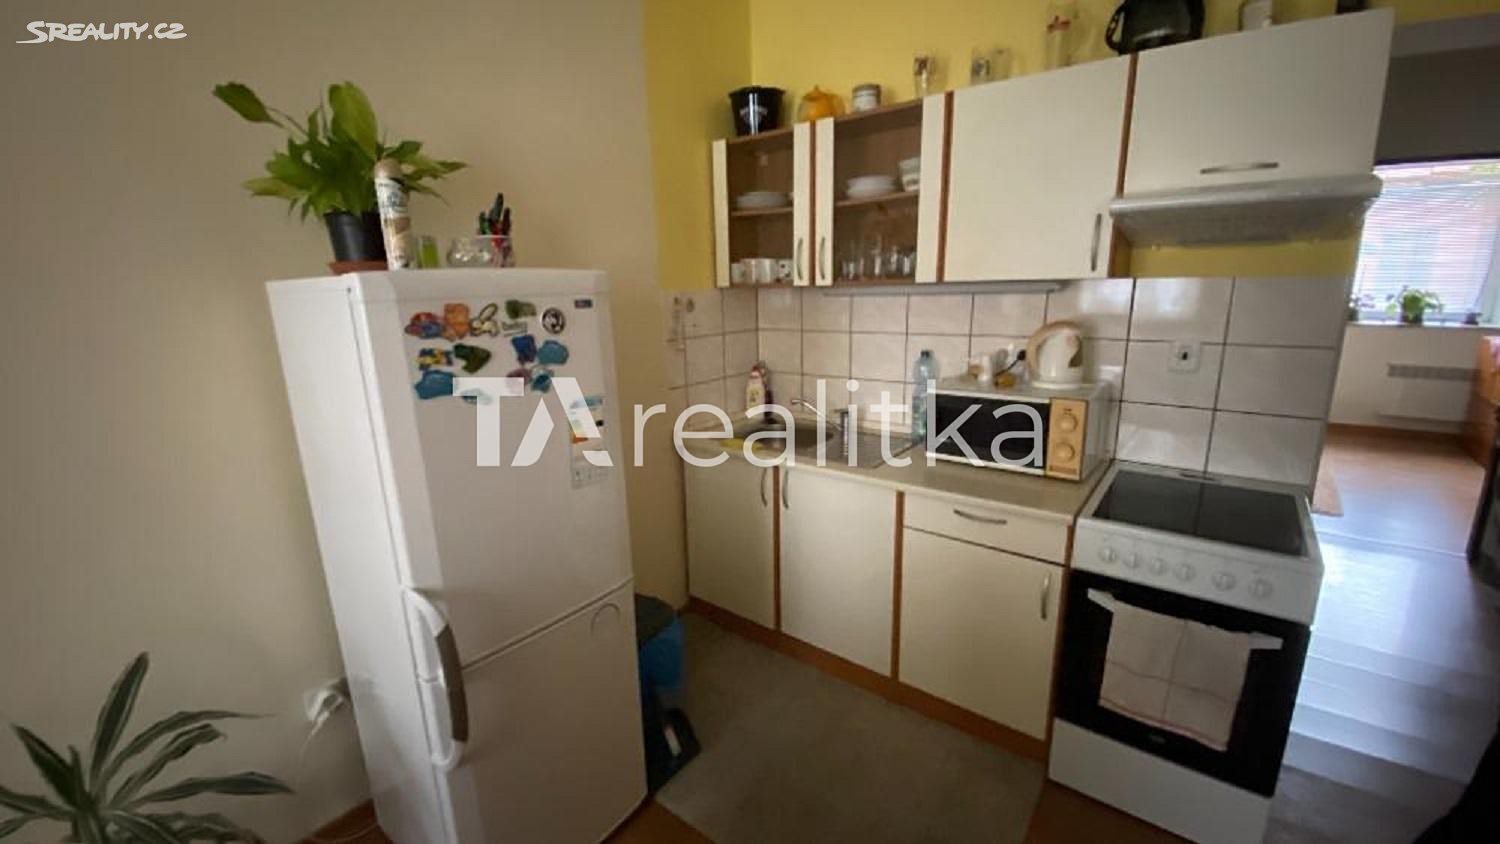 Prodej bytu 1+1 32 m², Krnov - Pod Cvilínem, okres Bruntál